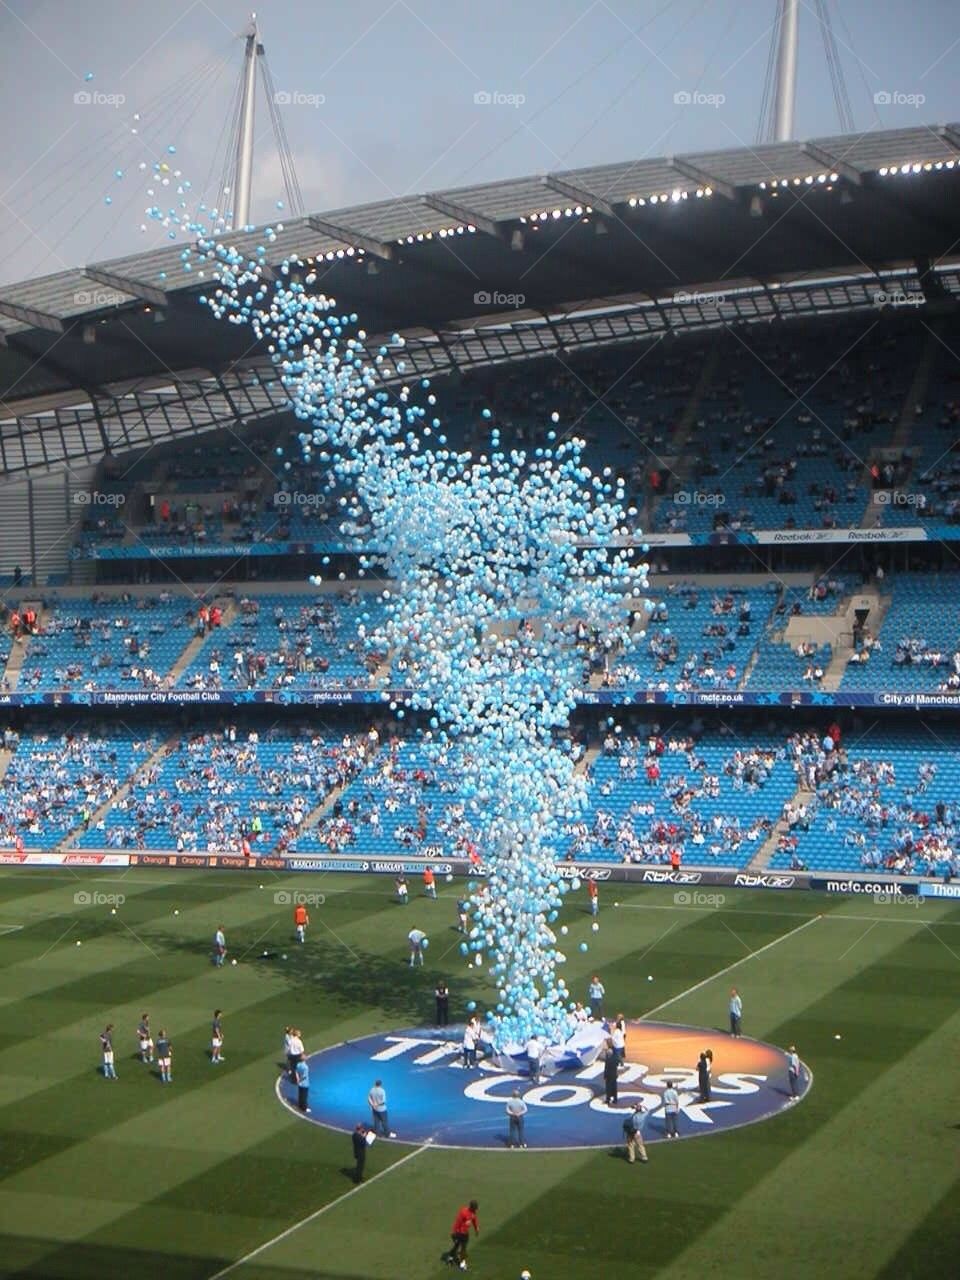 Balloon release in a stadium